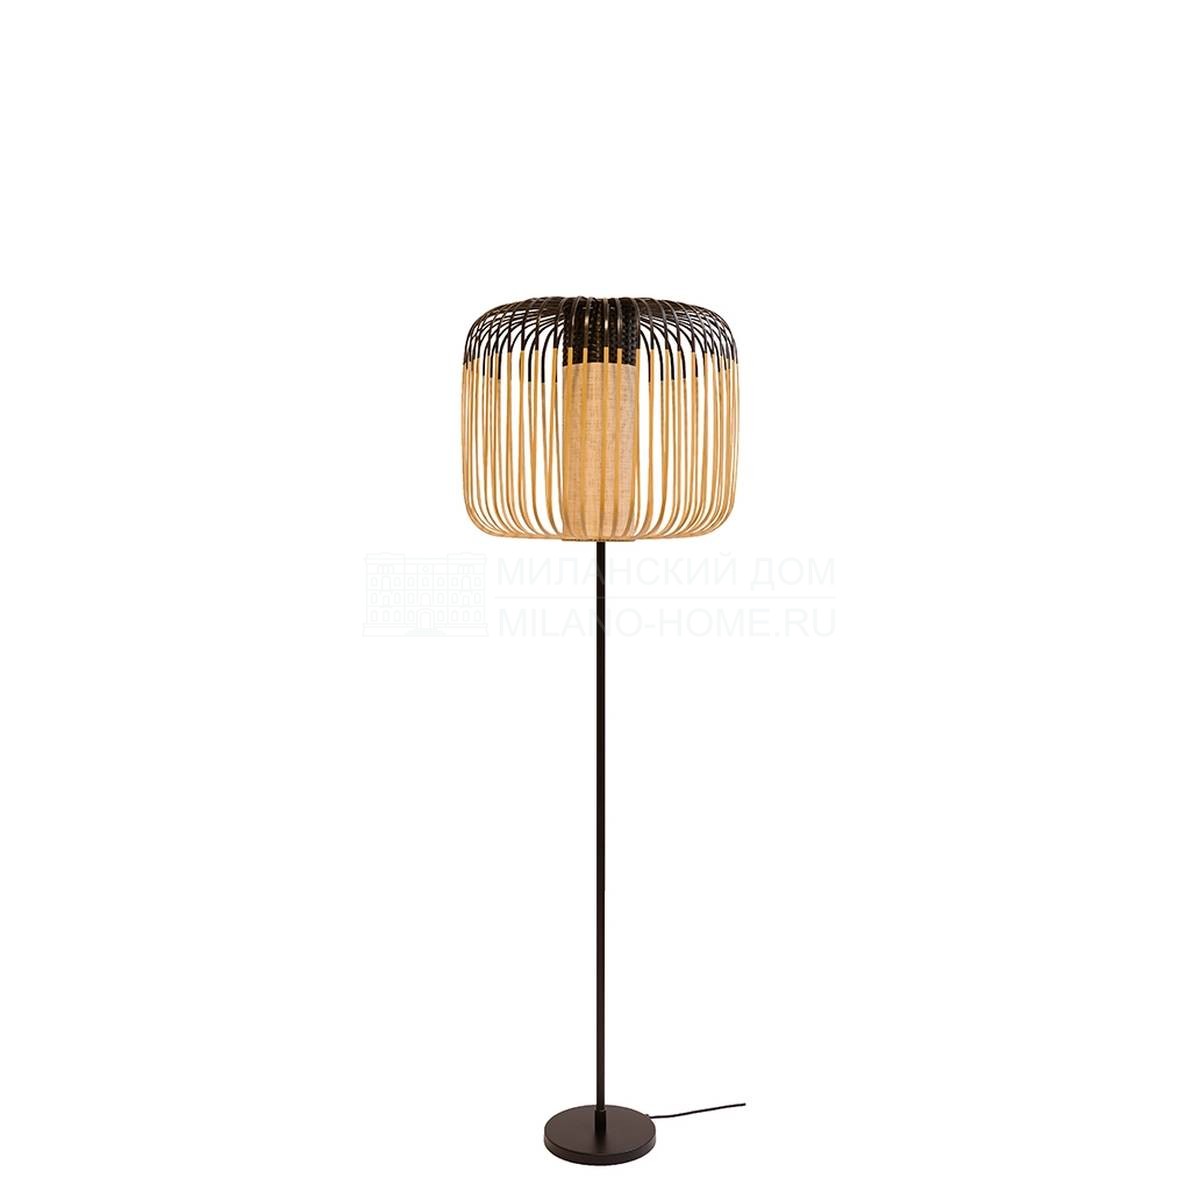 Торшер Floor lamp bamboo light из Франции фабрики FORESTIER